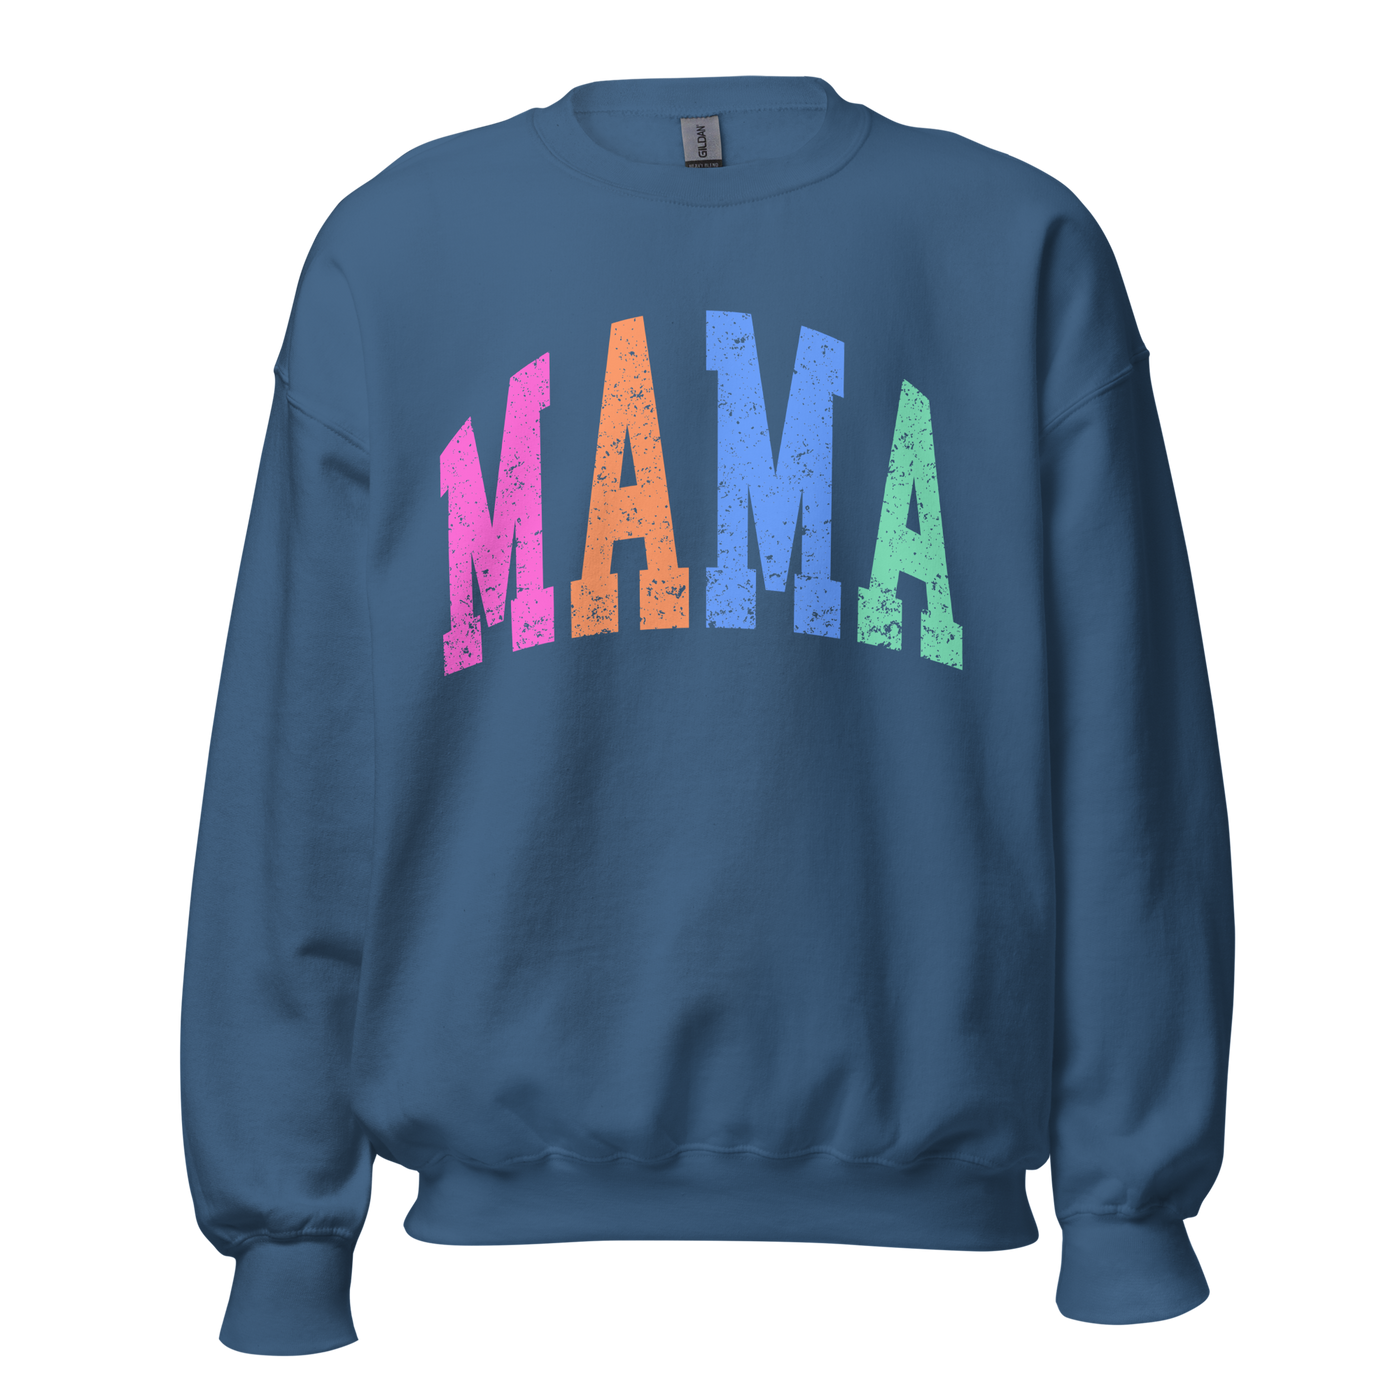 'Colorful Mama' Crewneck Sweatshirt